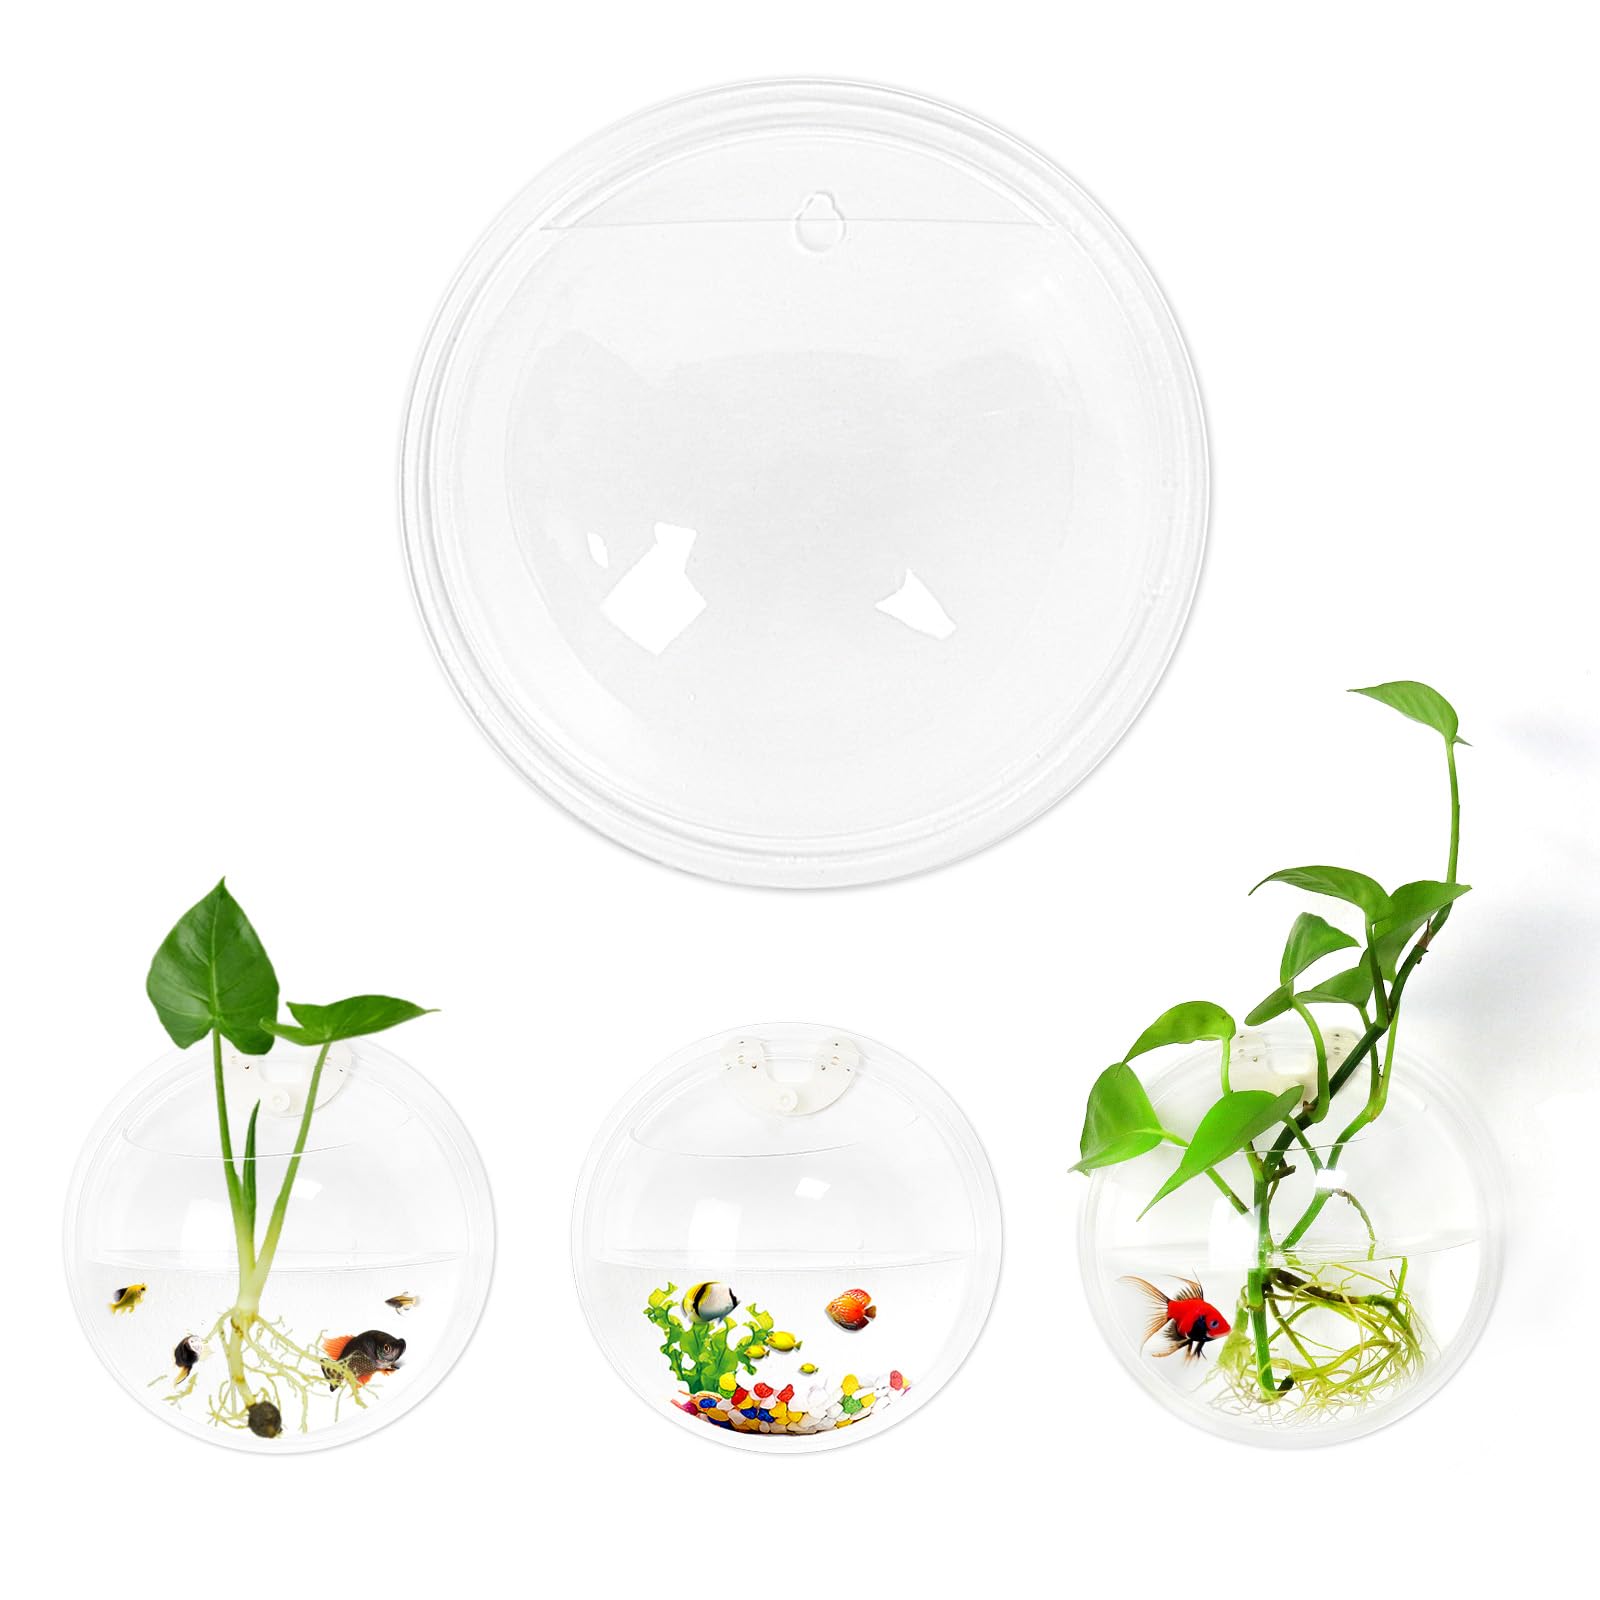 Brand: 2PCS Wall Hanging Plant Terrarium - Clear Acrylic Globe